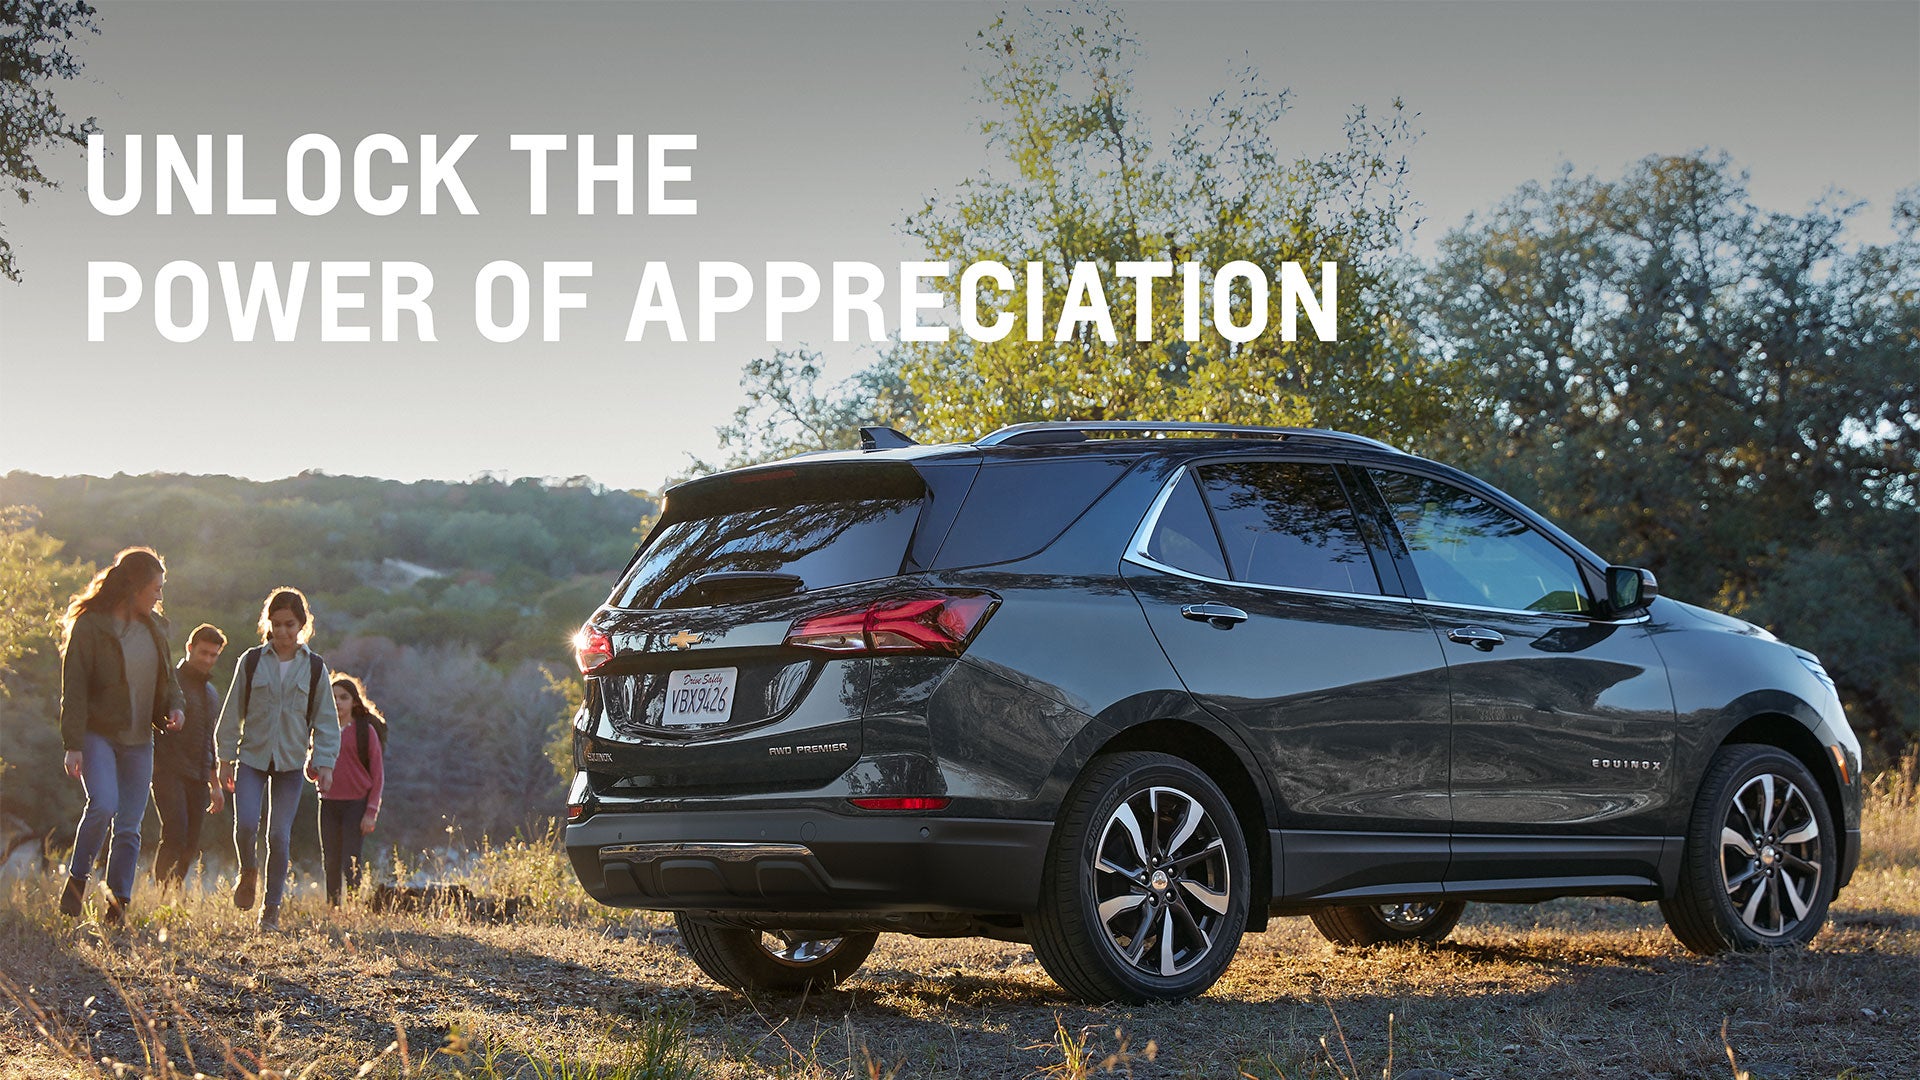 Unlock the power of appreciation | Baum Chevrolet Buick in Clinton IL